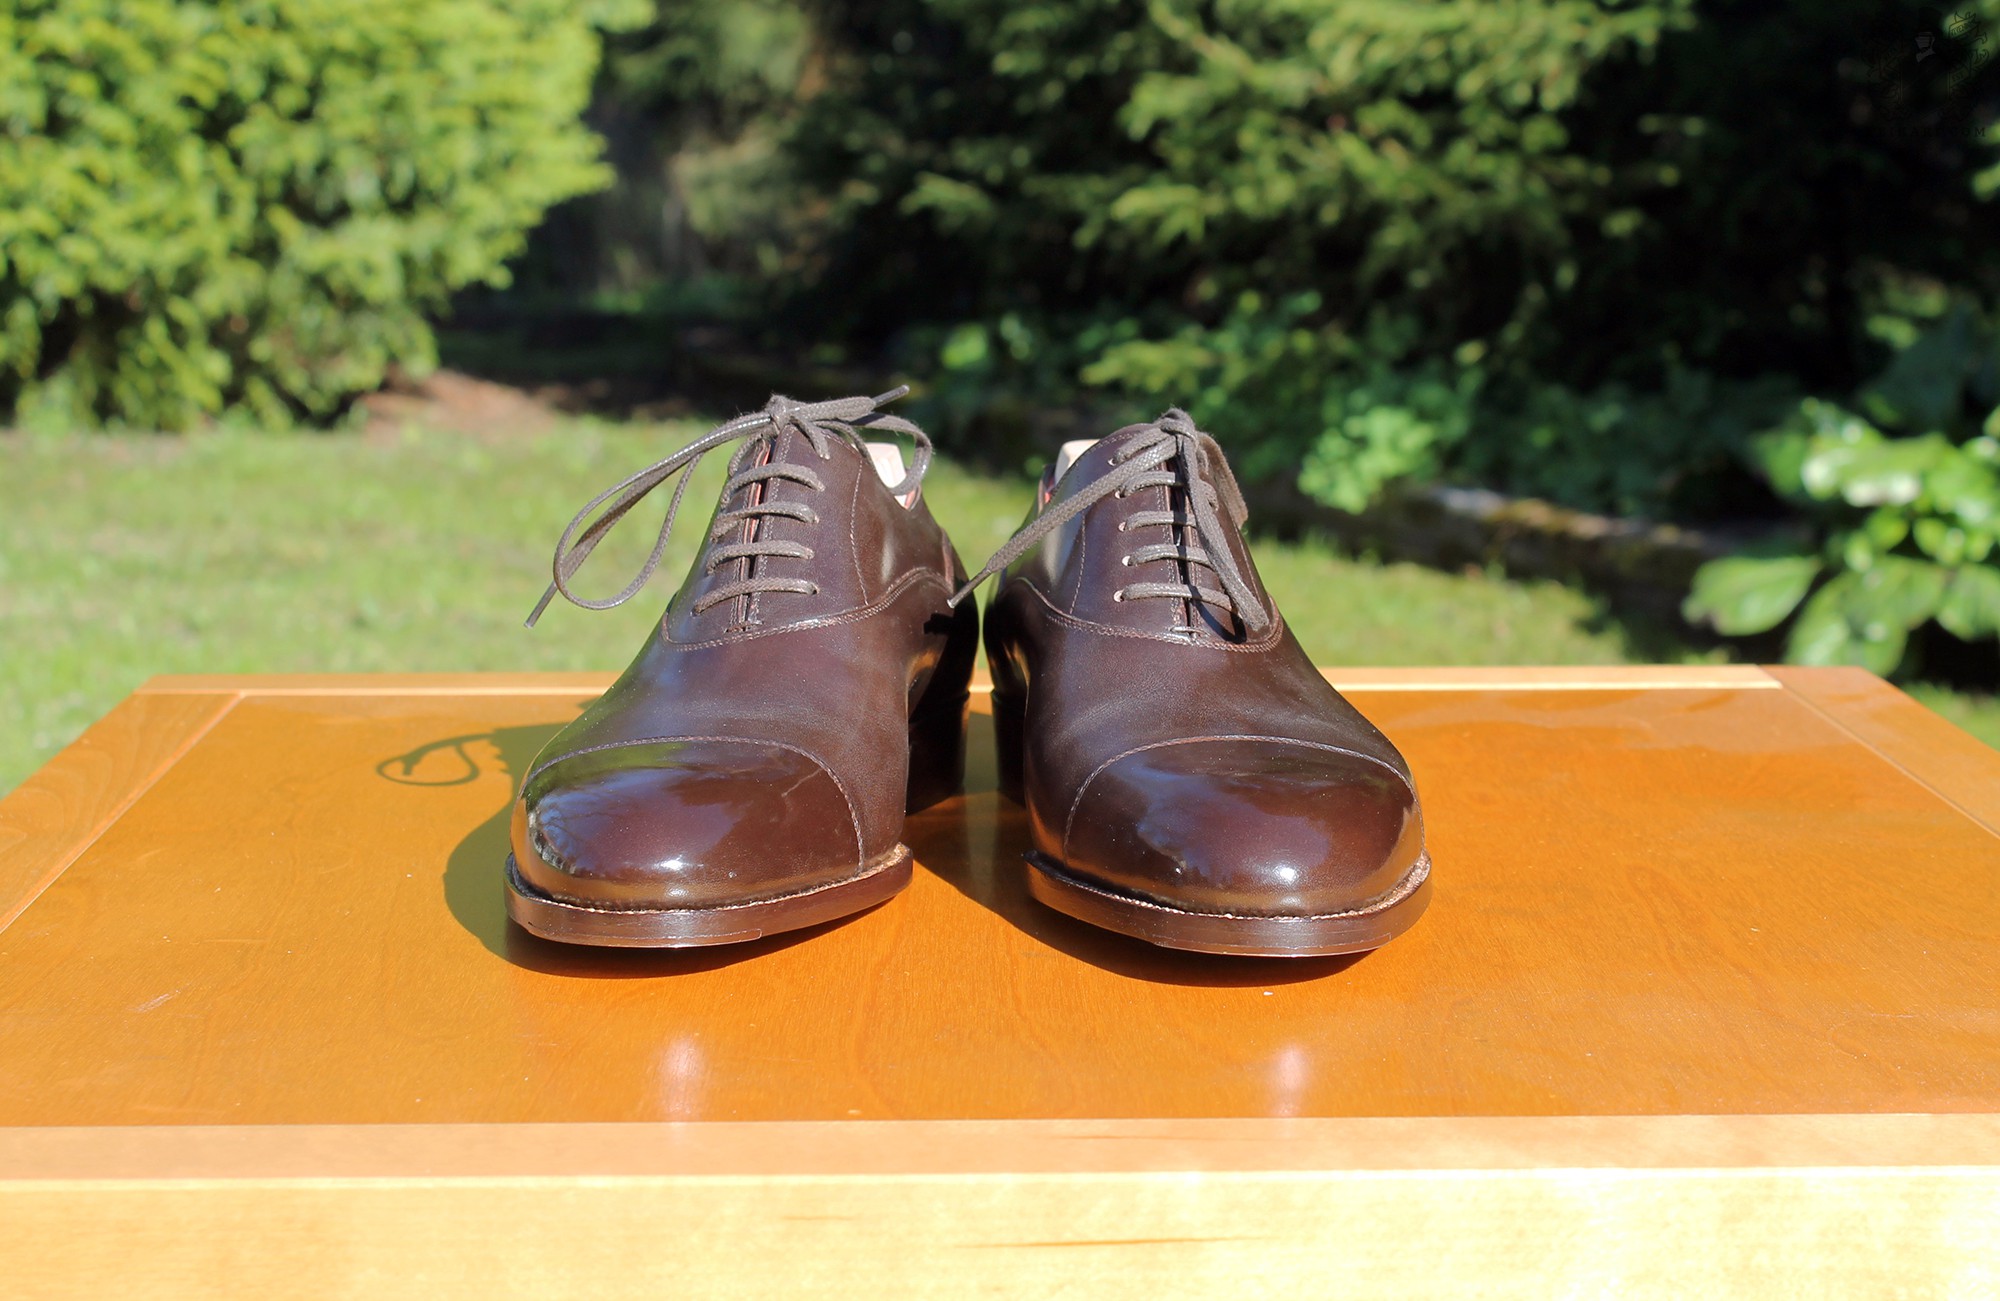 Anatomy_of_Saint_Crispins_shoes_at_Keikari_dot_com06.jpg